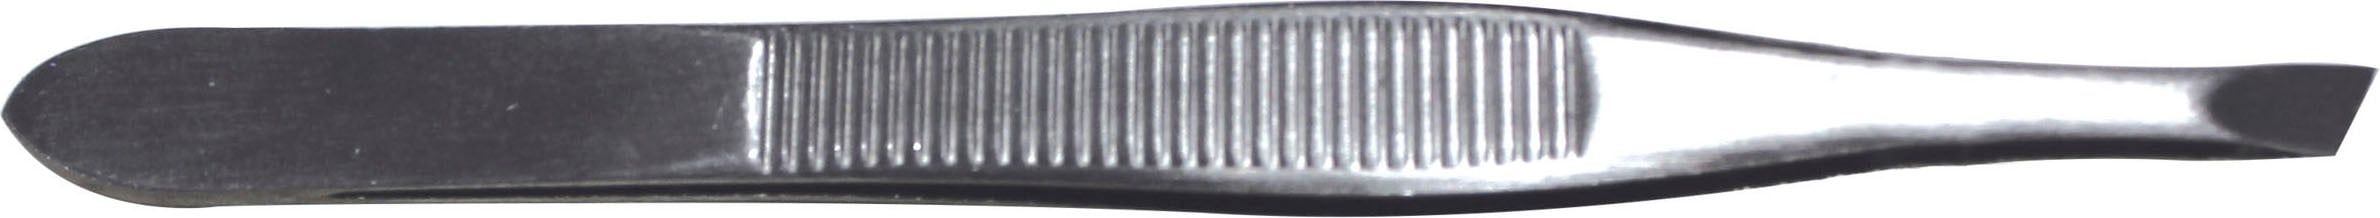 Remington Beauty-Trimmer »NE3455«, 2 Aufsätze, antimikrobielles Nano-Silber  Gehäuse online kaufen | Jelmoli-Versand